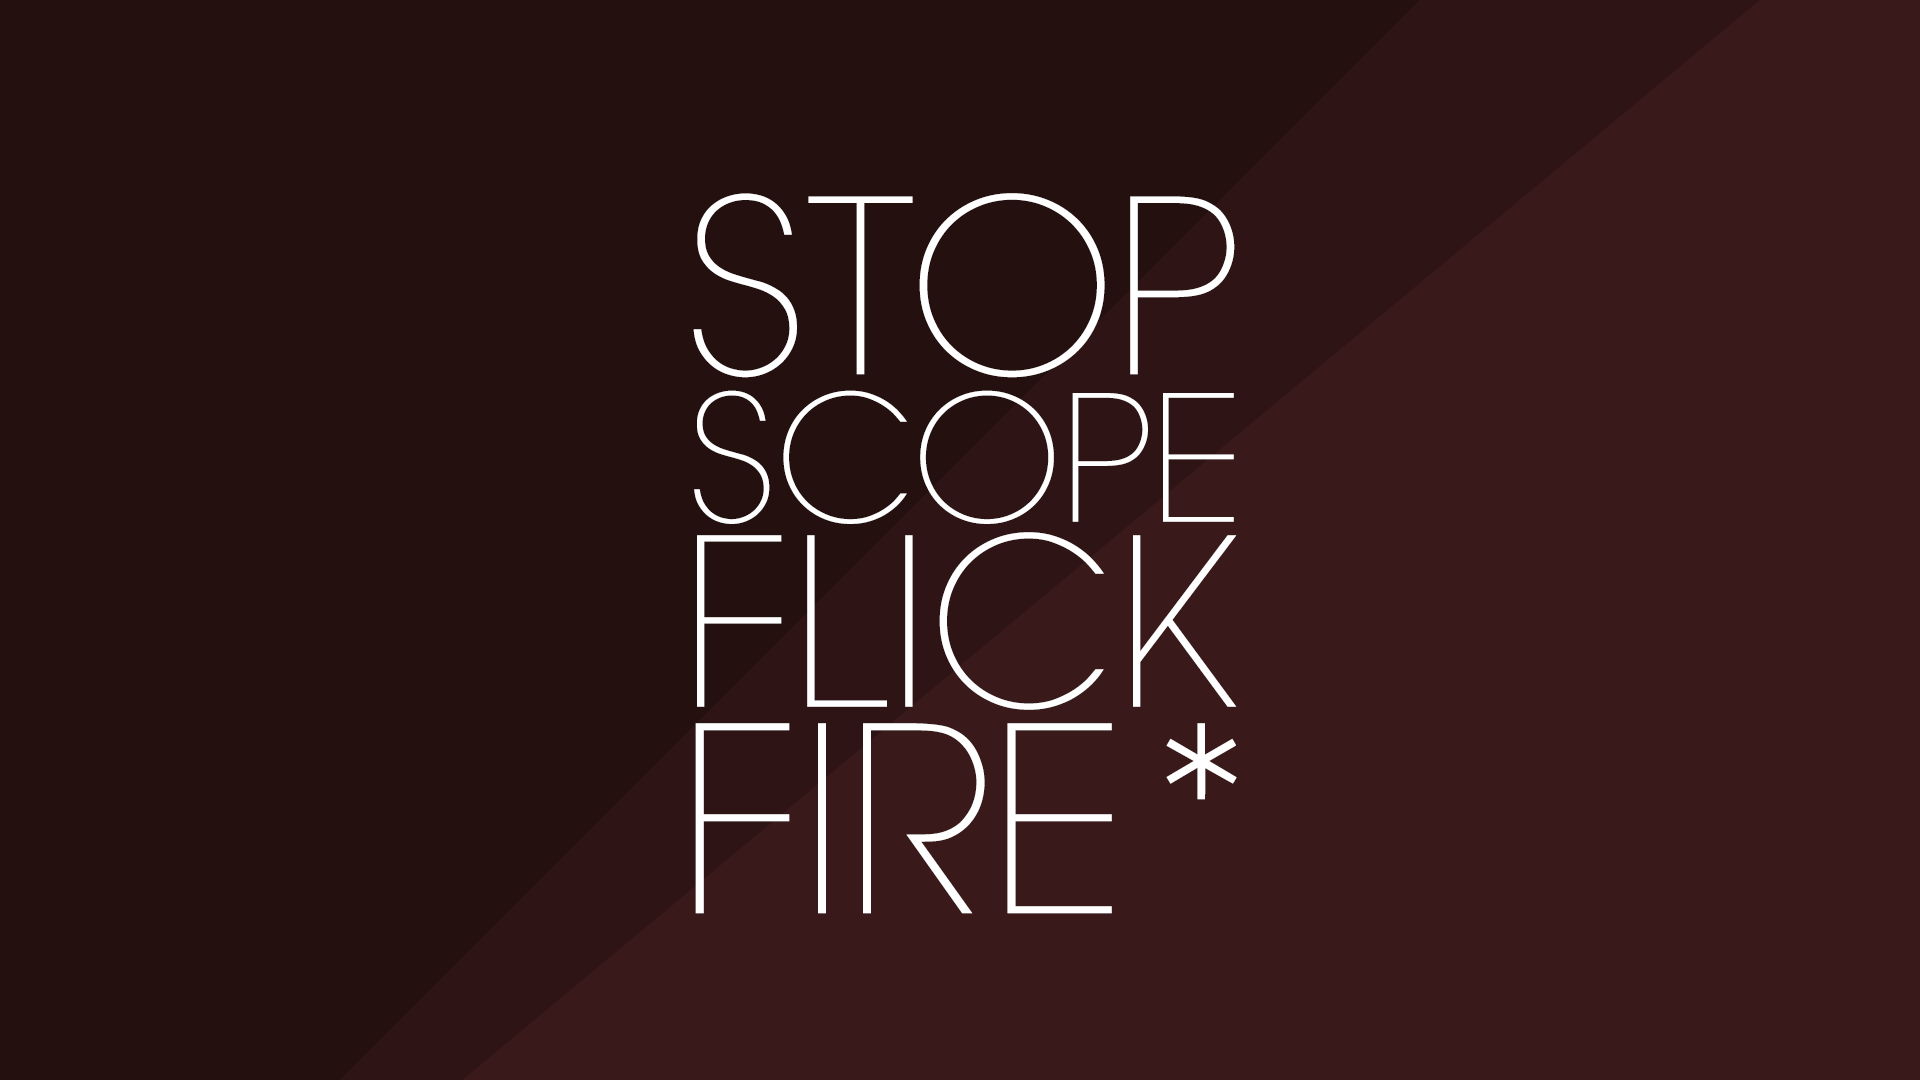 Stop. Scope. Flick. Fire* wallpaper